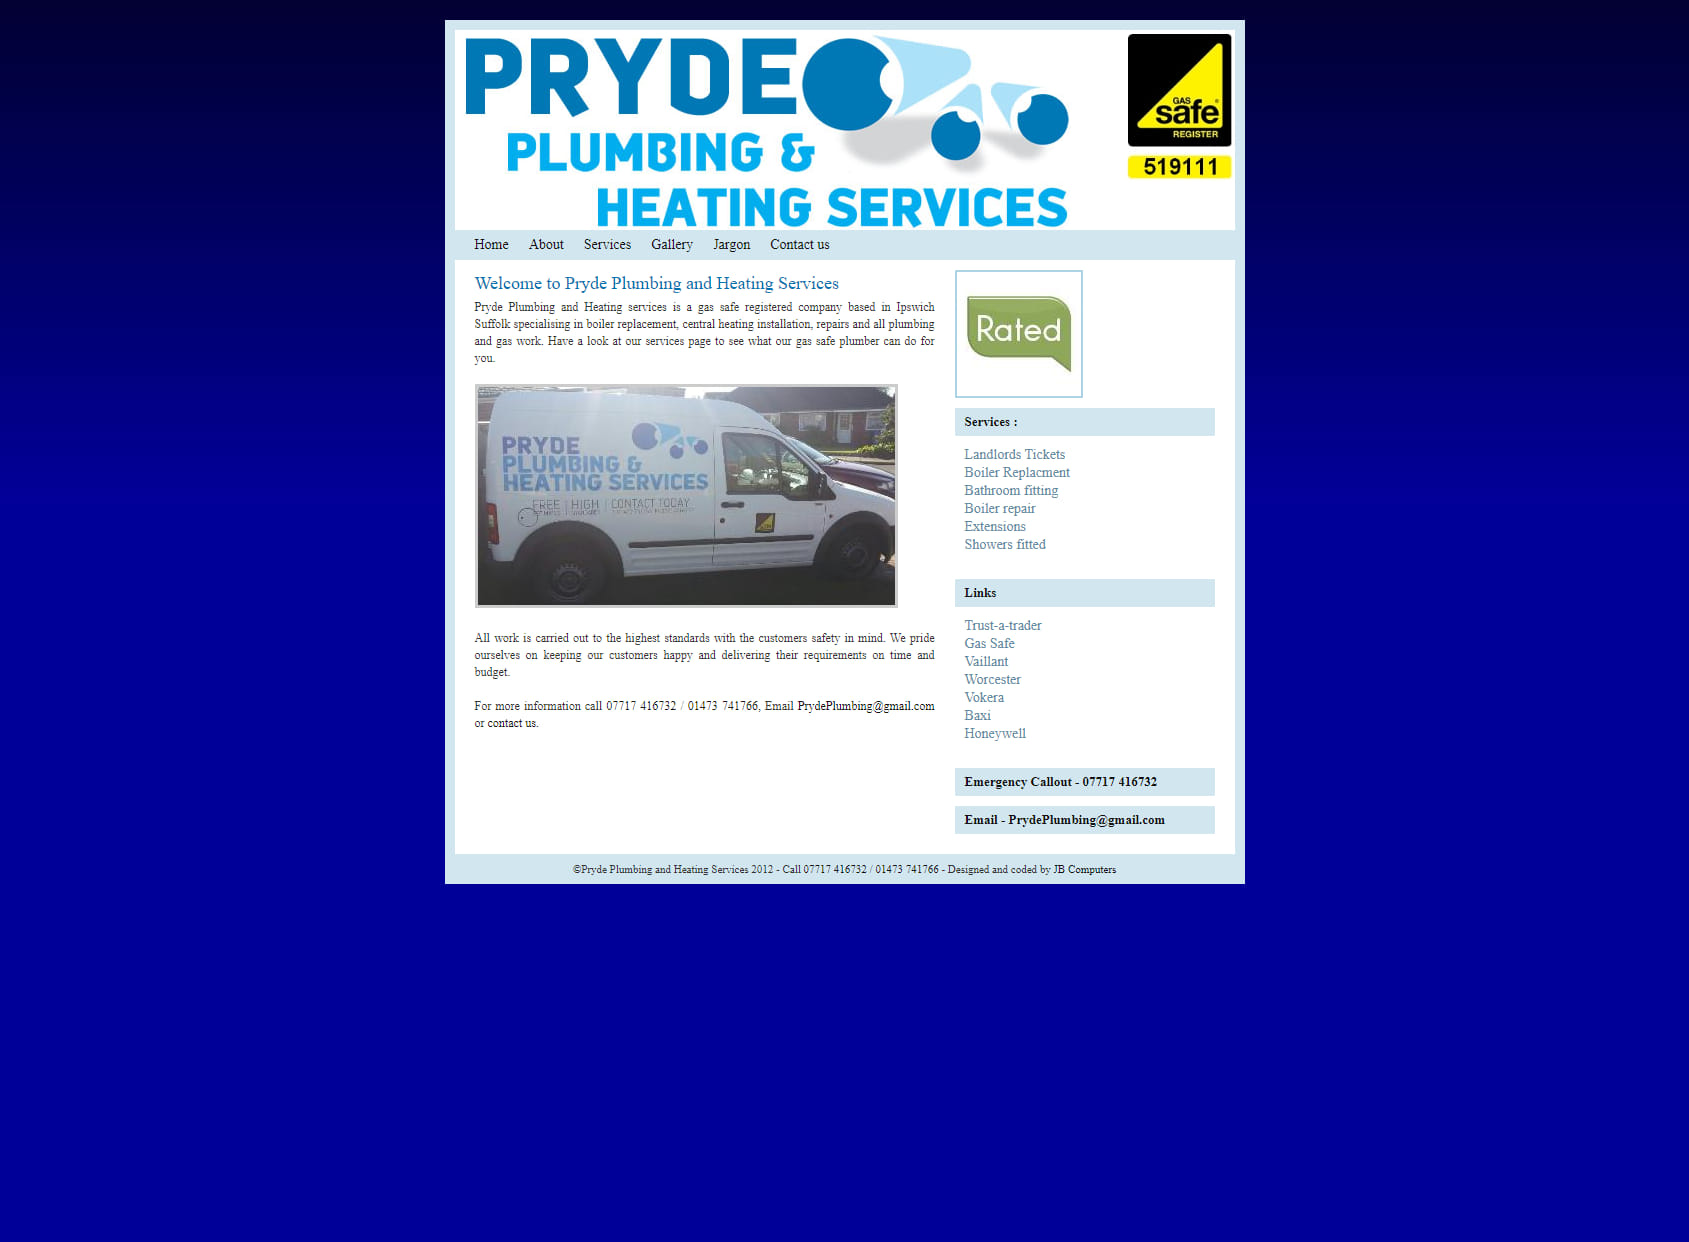 Pryde Plumbing & Heating Services